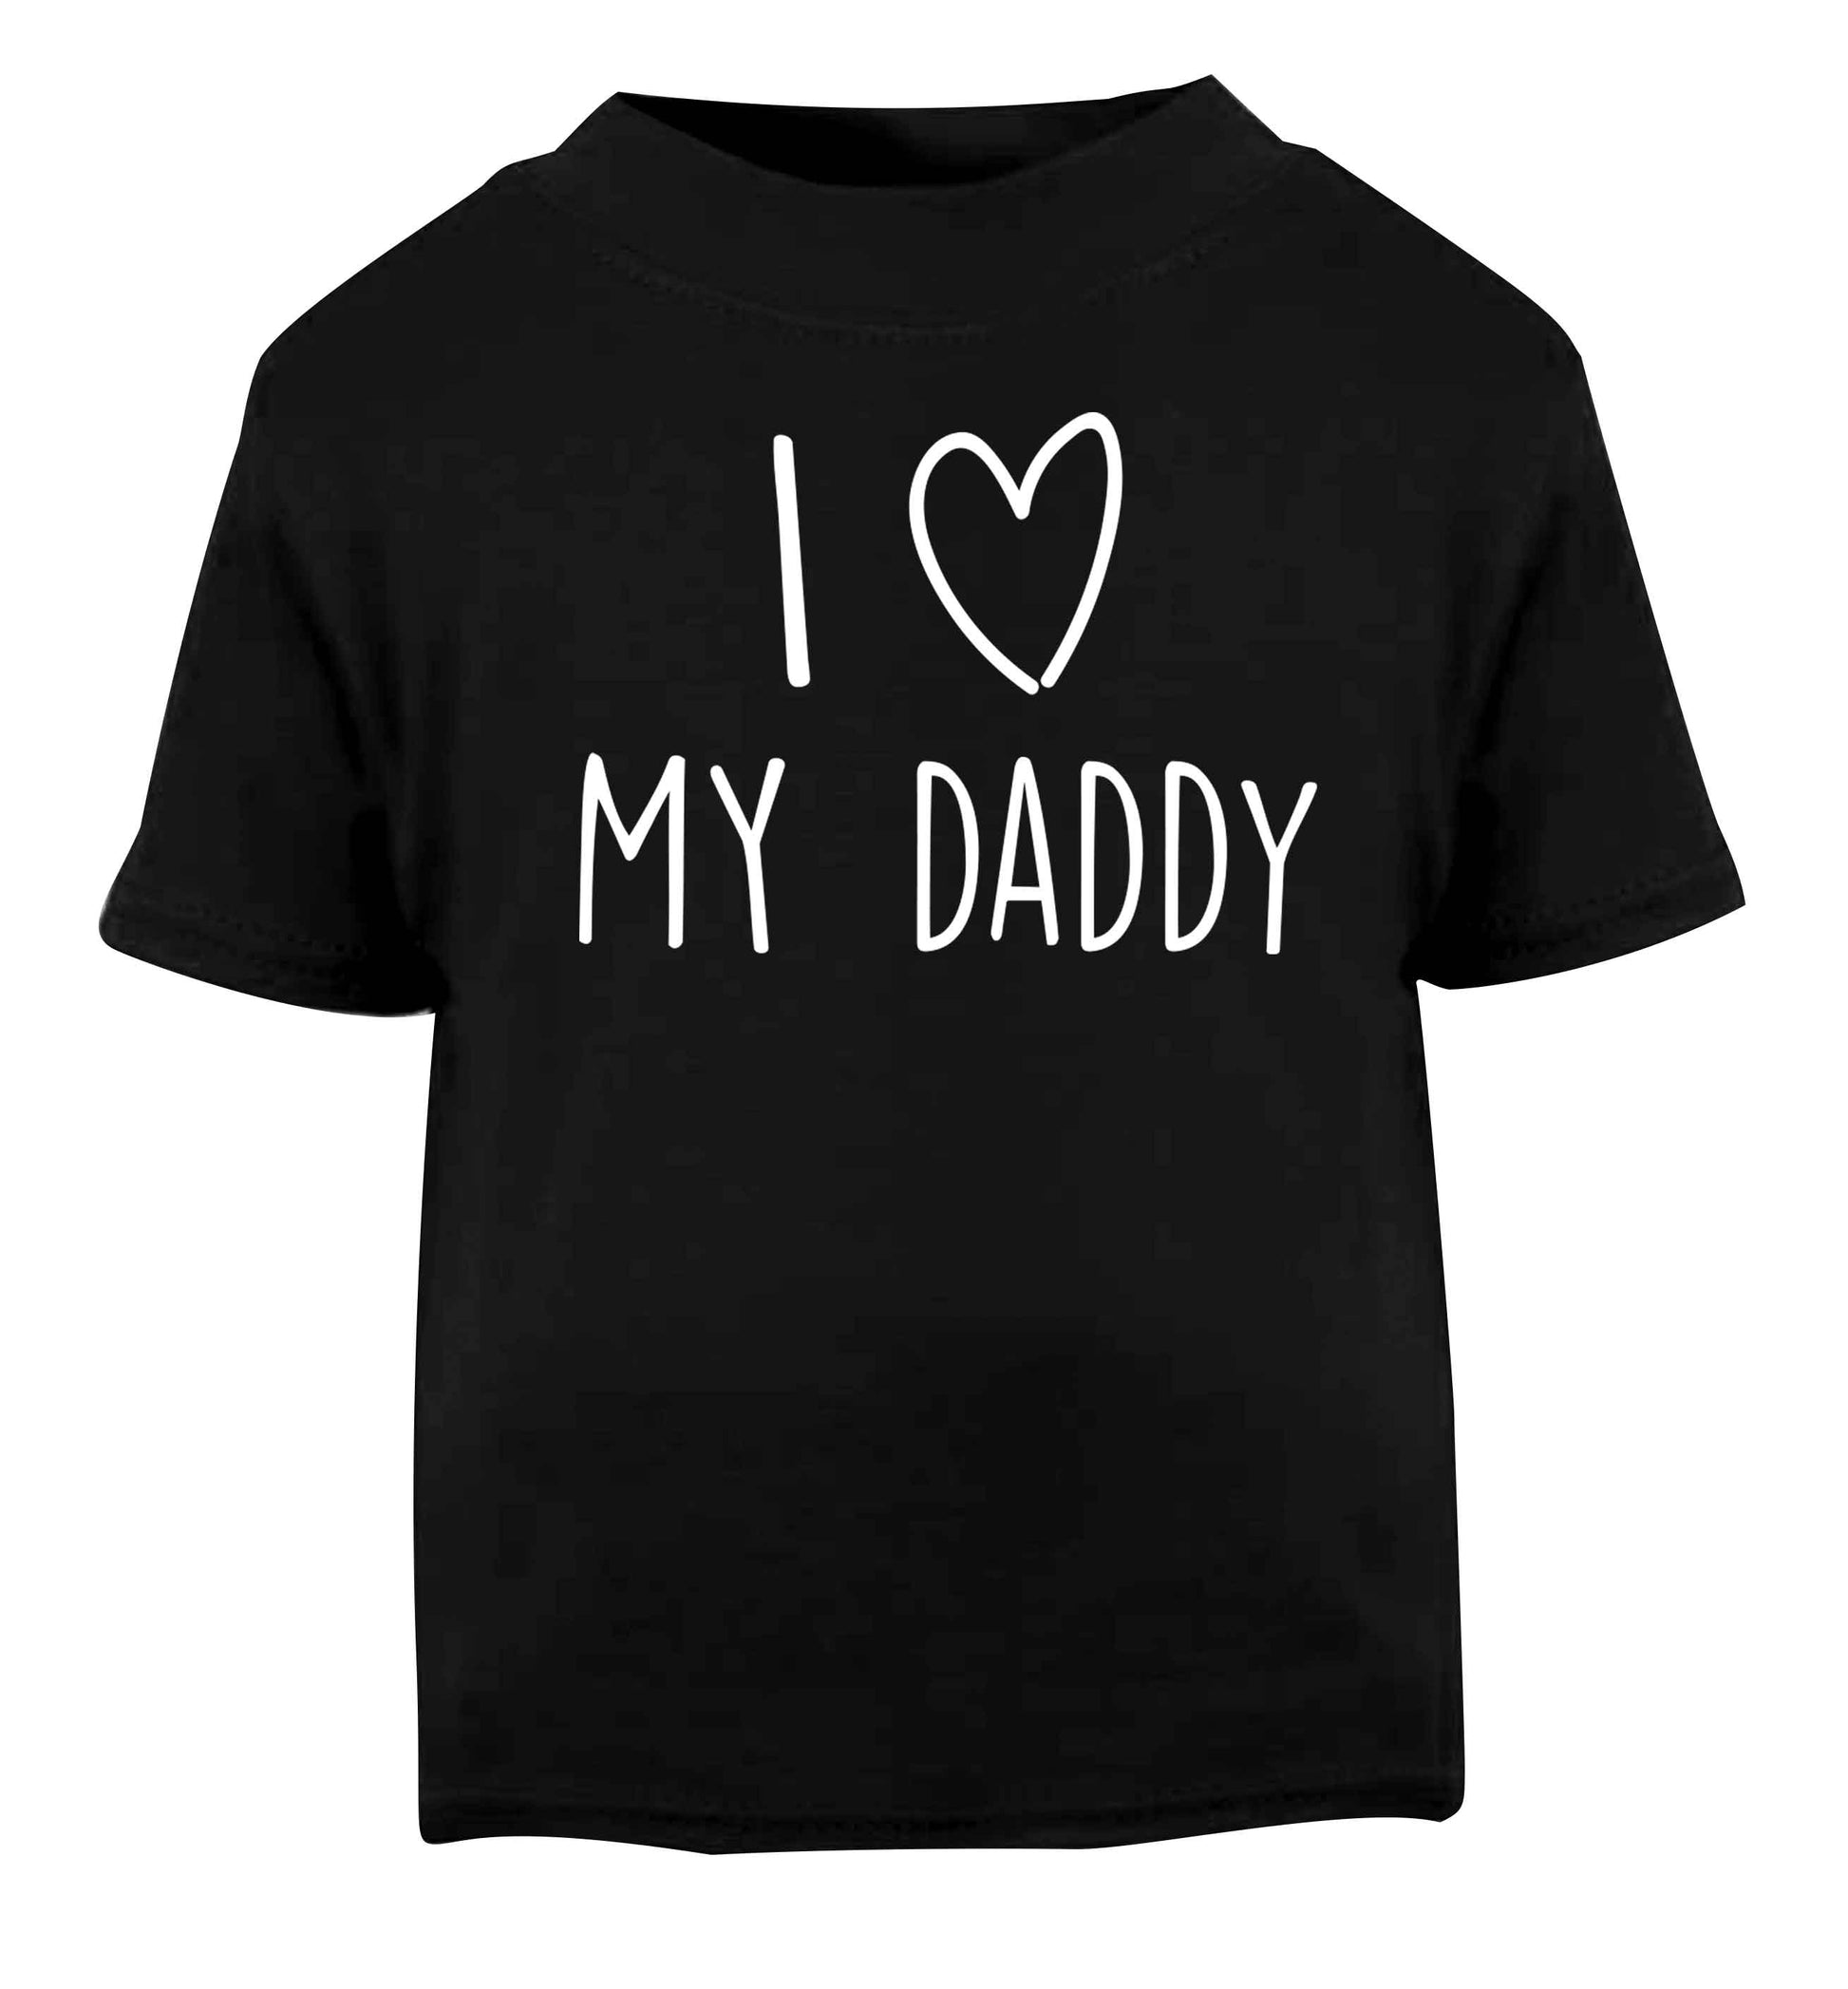 I love my daddy Black baby toddler Tshirt 2 years